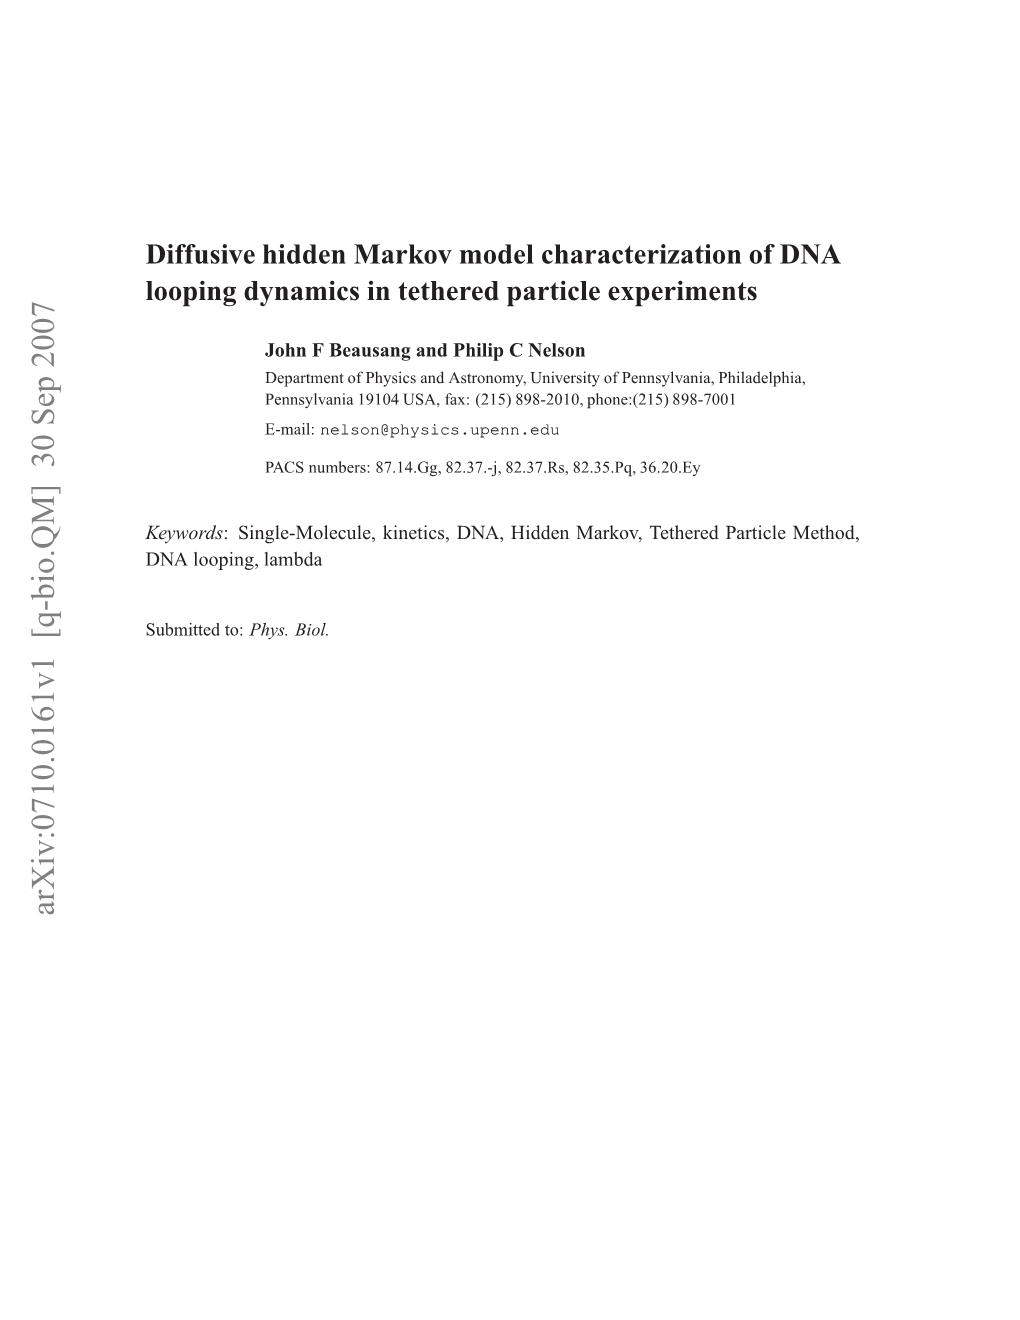 Diffusive Hidden Markov Model Characterization of DNA Looping